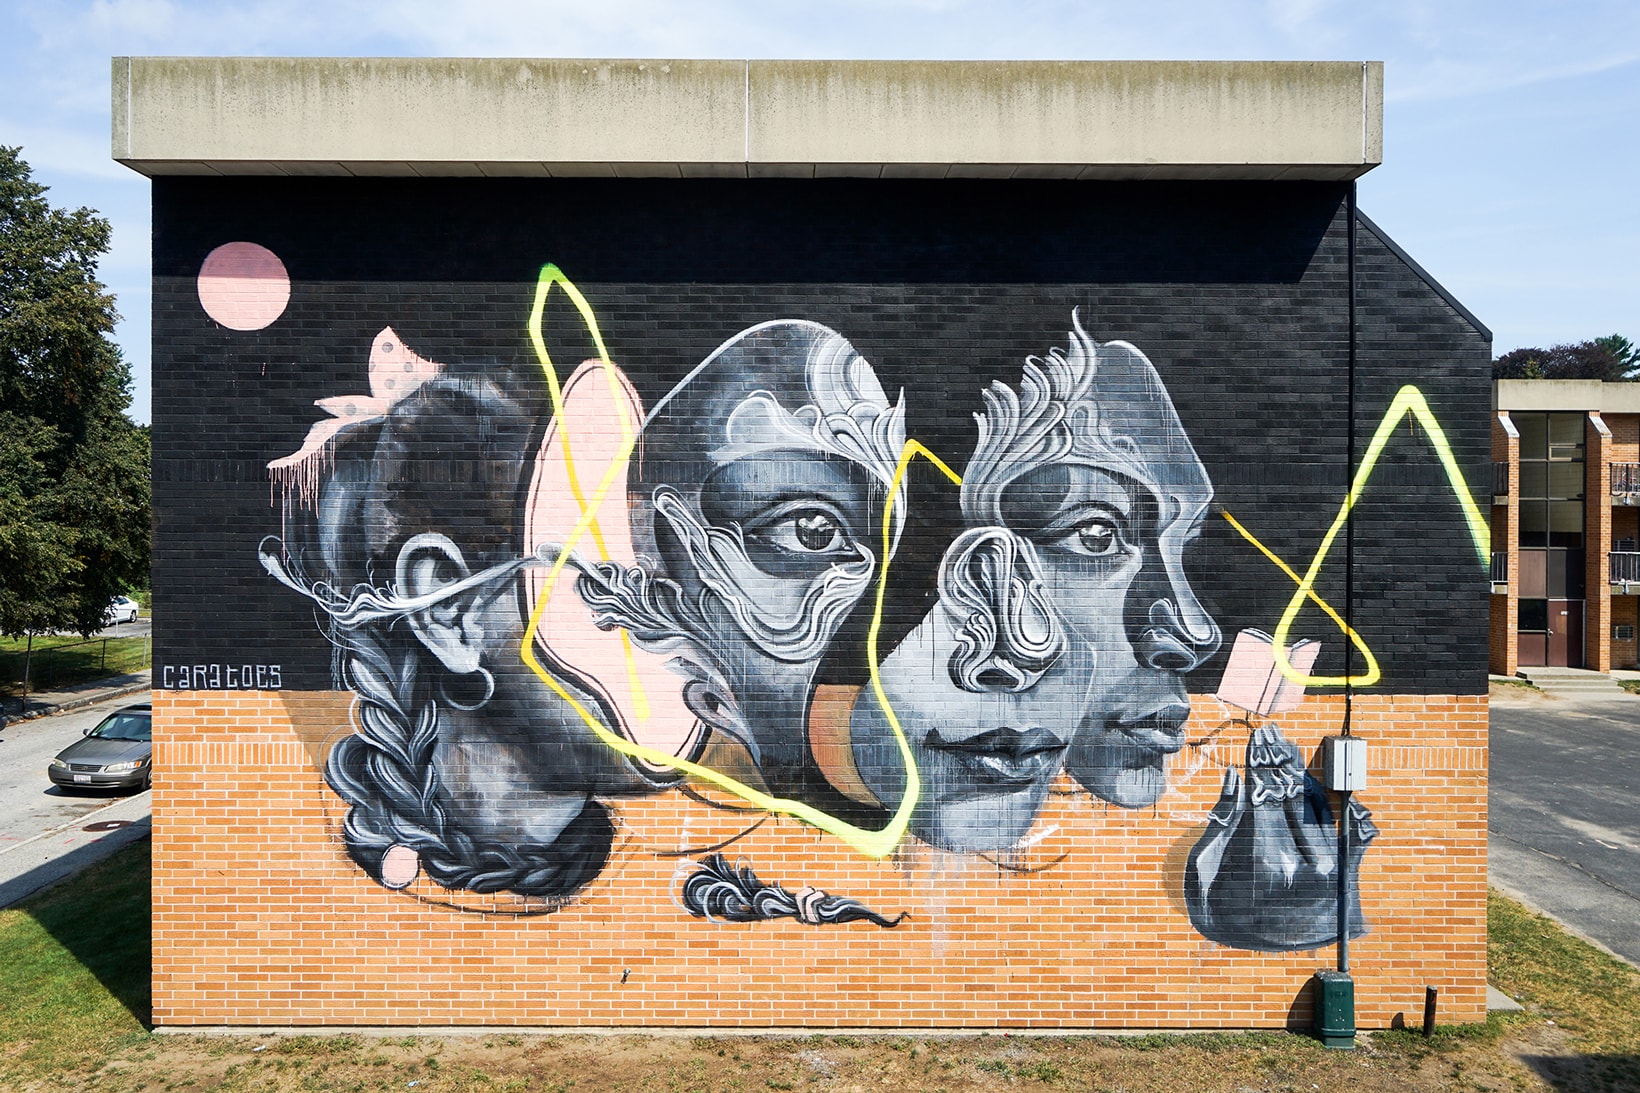 POW WOW Worcester Street Art Mural Artwork Paintings Nosego Caratoes APEXER Denial Pichiavo Nicky Davis